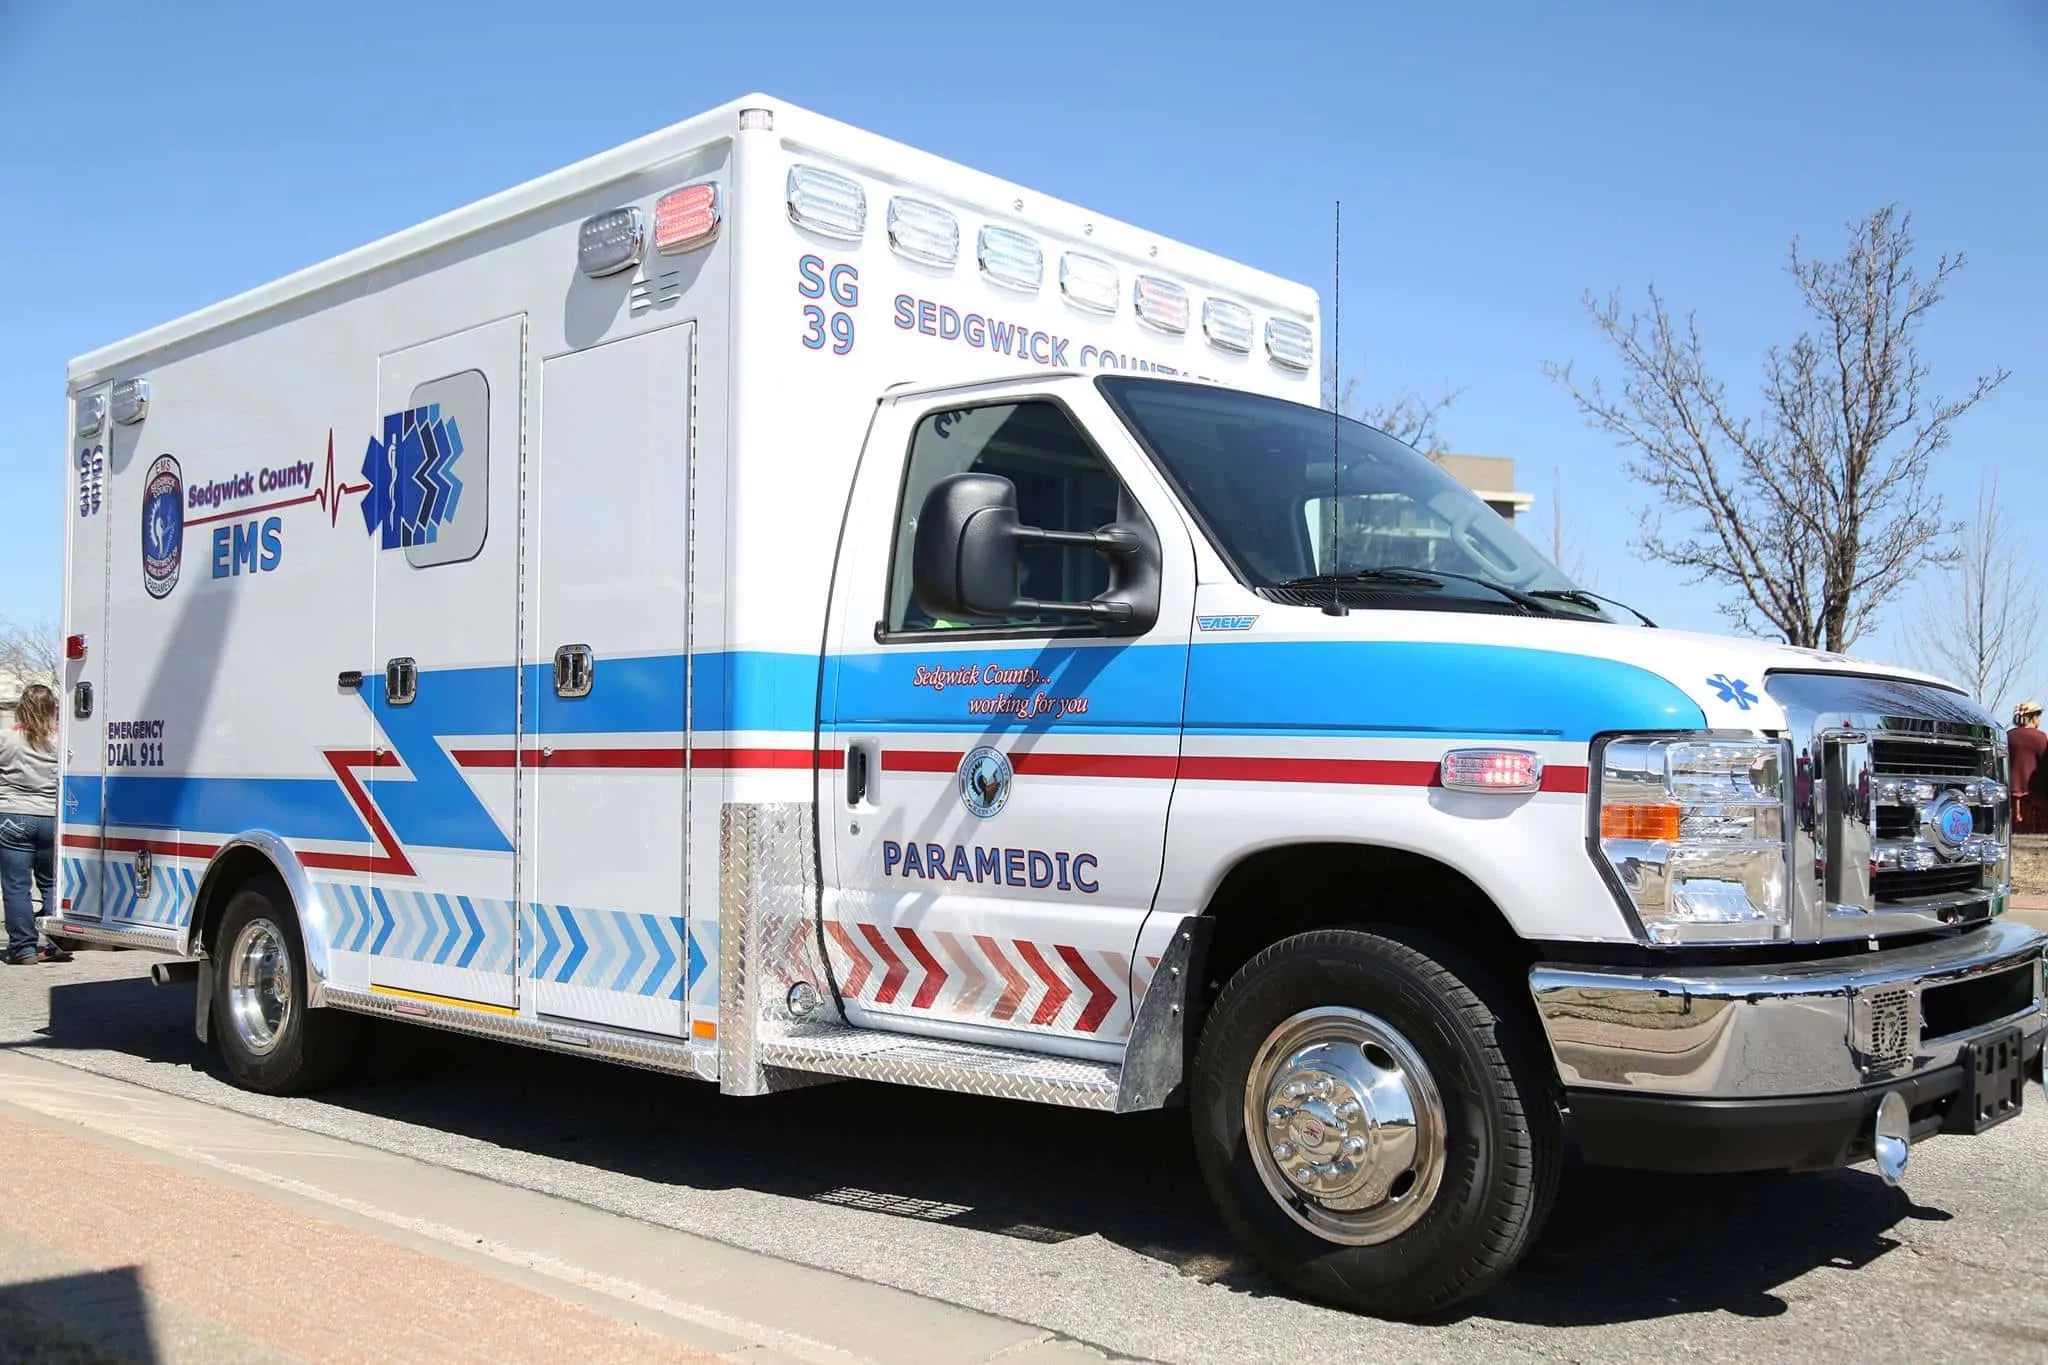 ems-ambulance-jpg-13